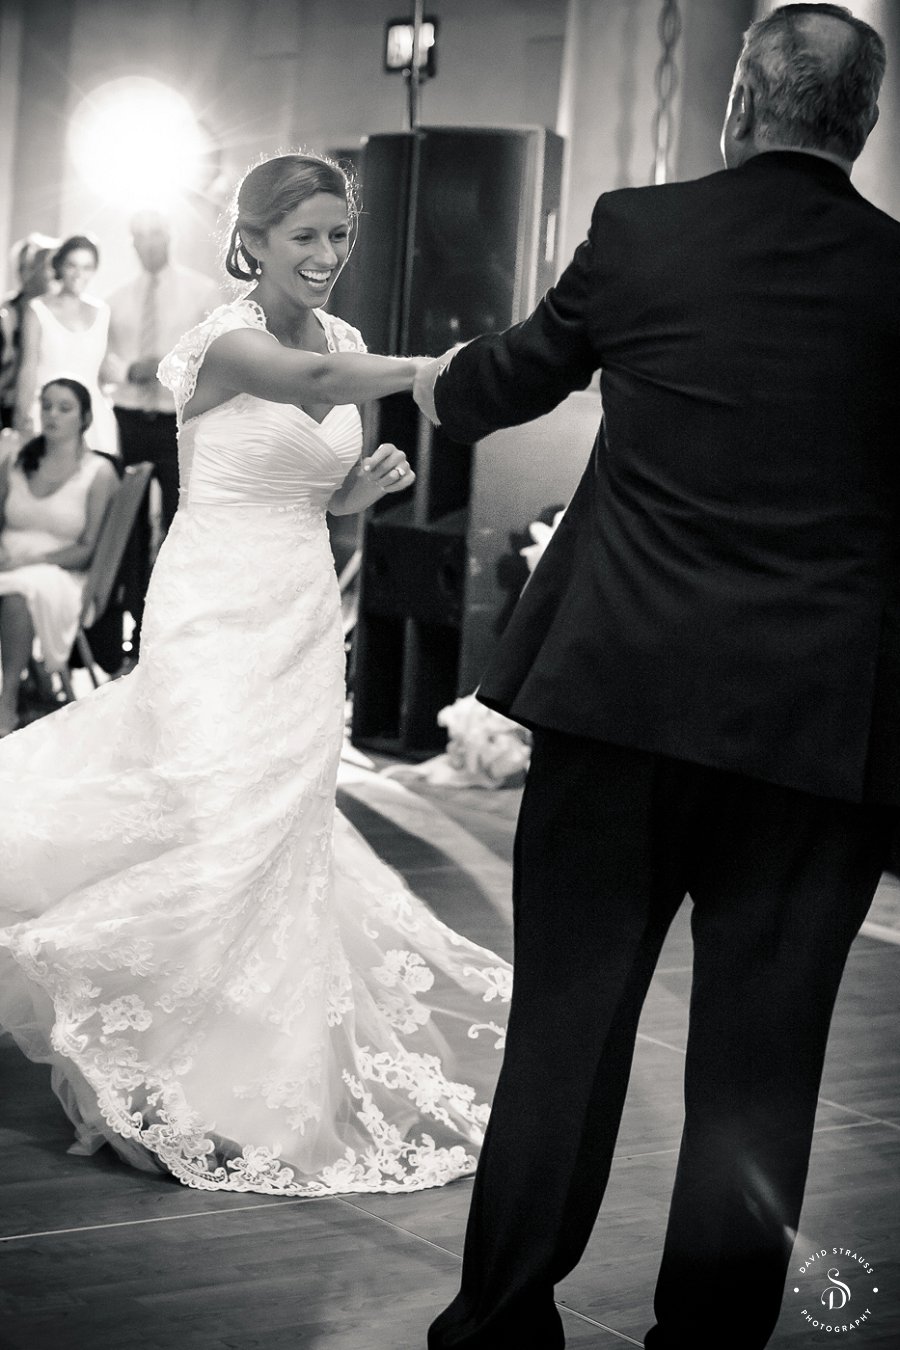 Atlanta Wedding Photography - Charleston Photographer David Strauss - Claire and Kyle - 49